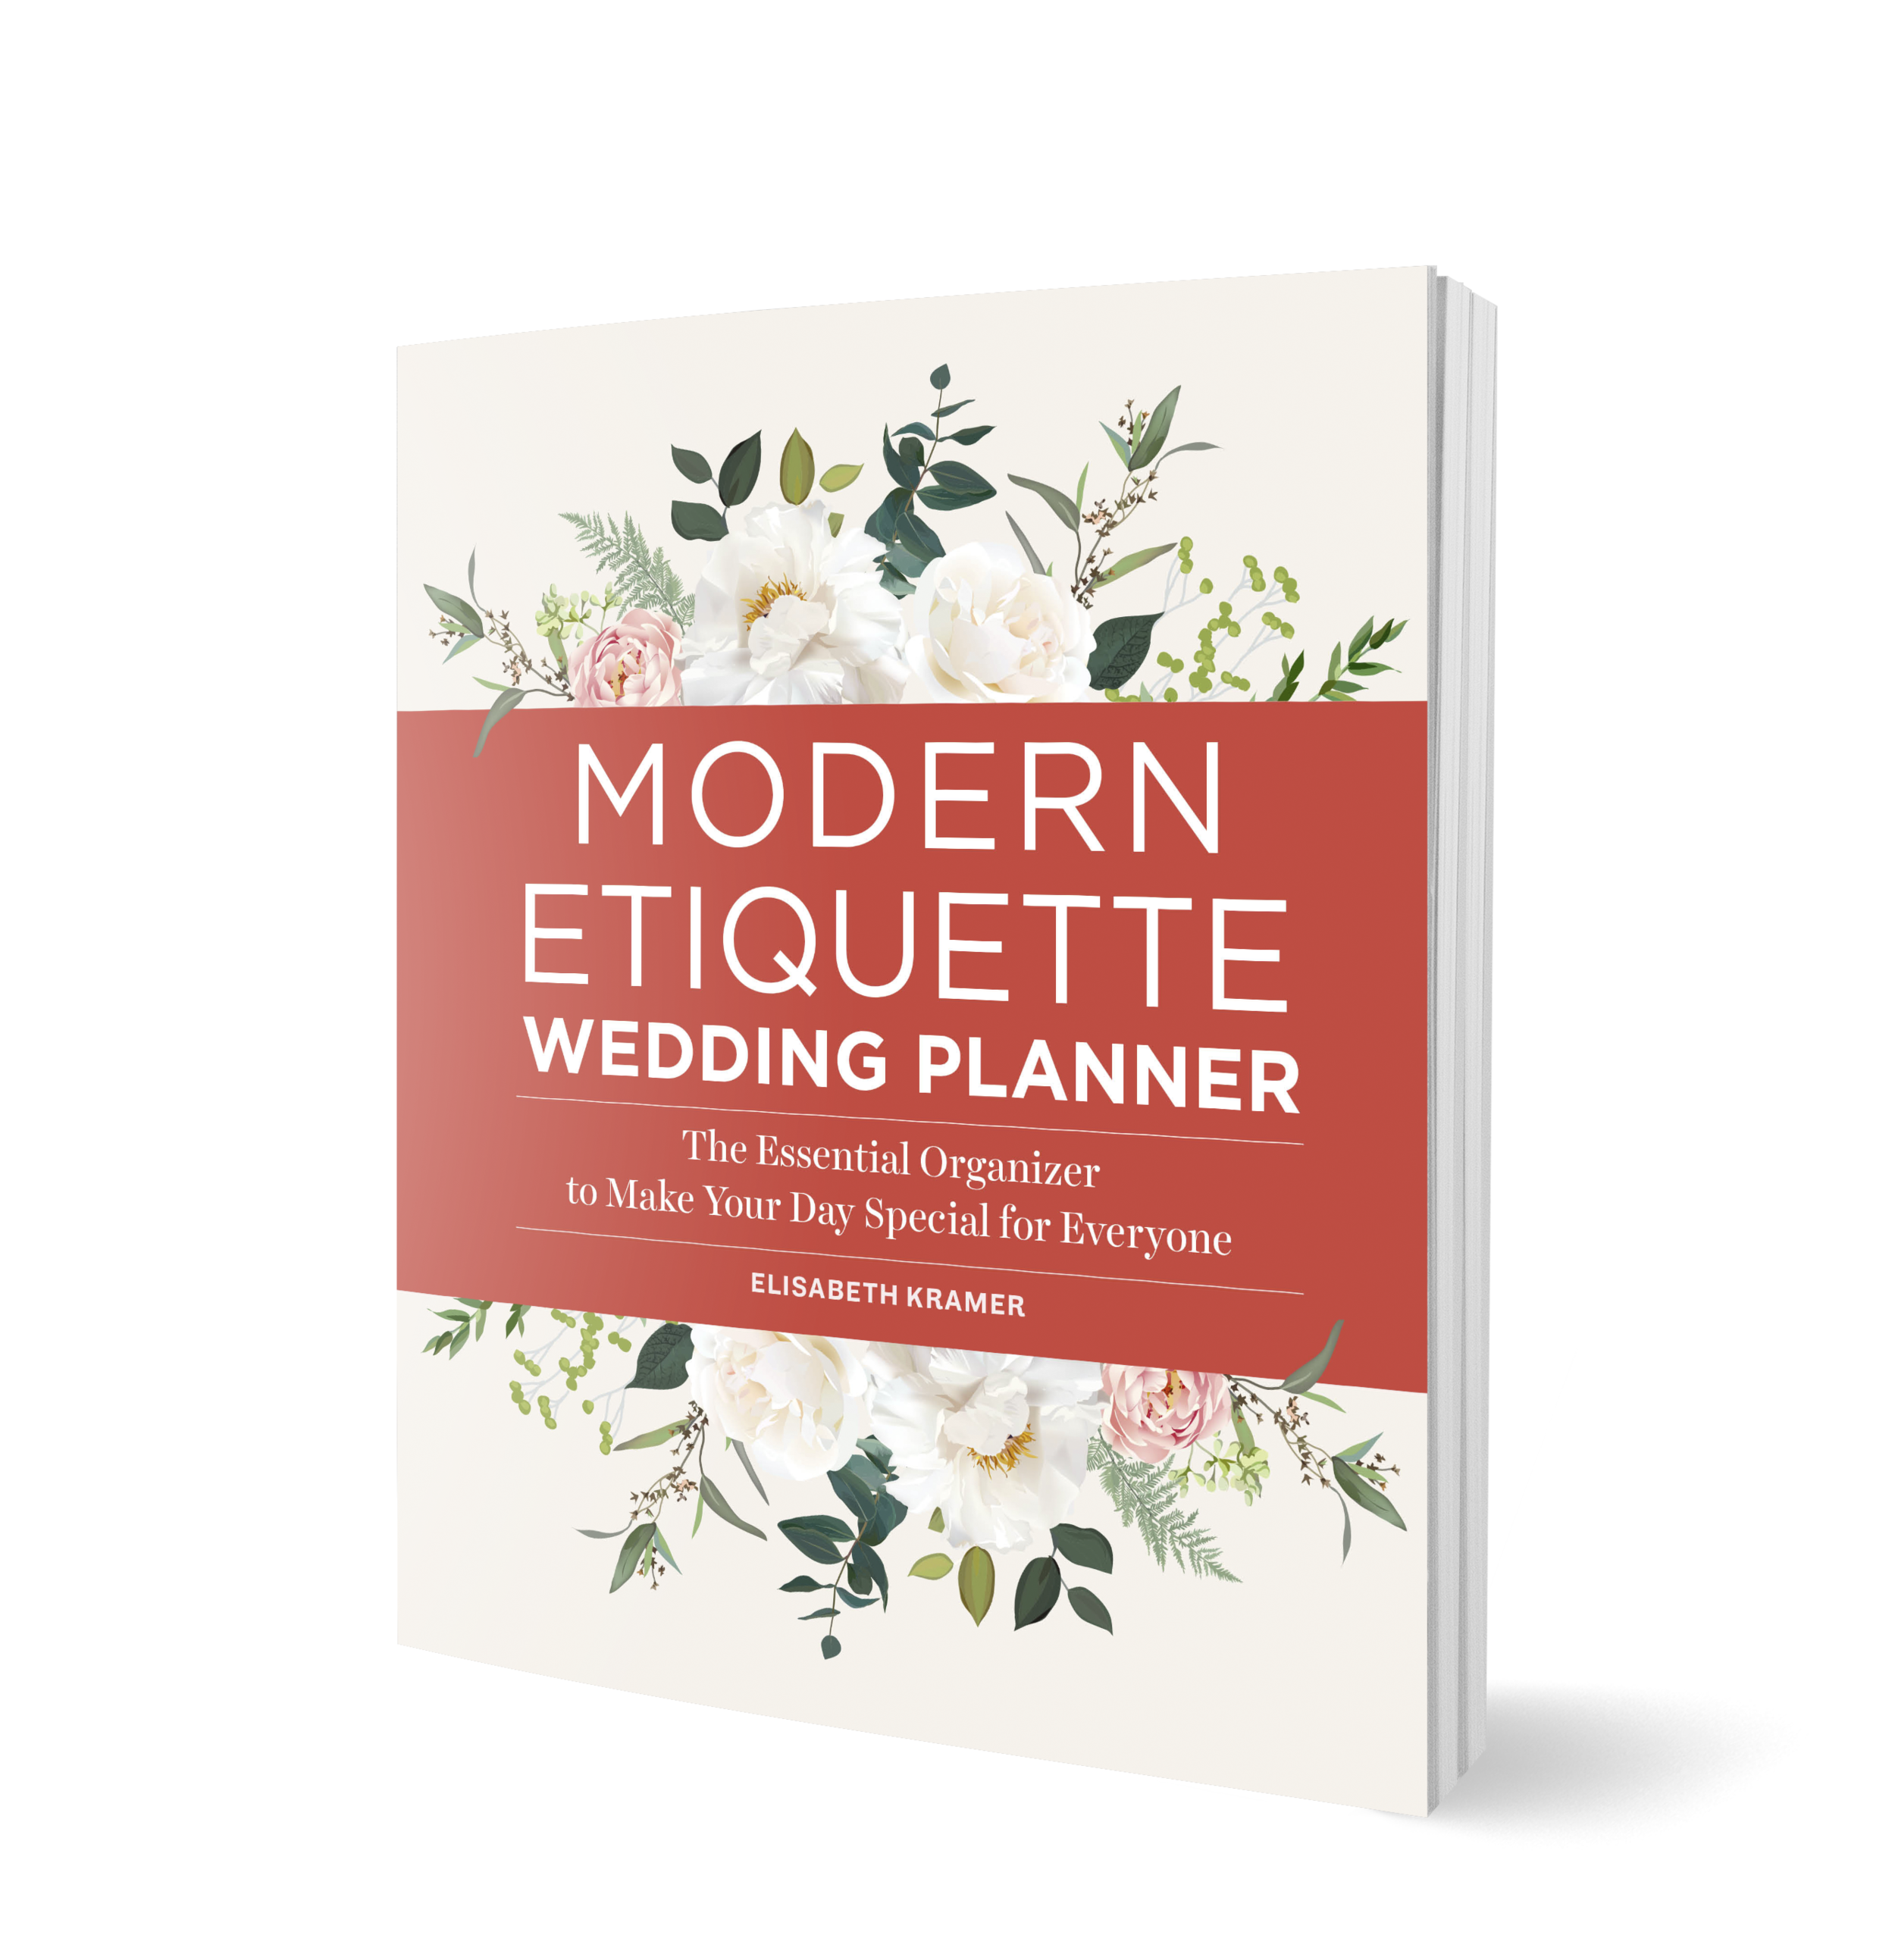 Modern Etiquette Wedding Planner — available wherever books are sold